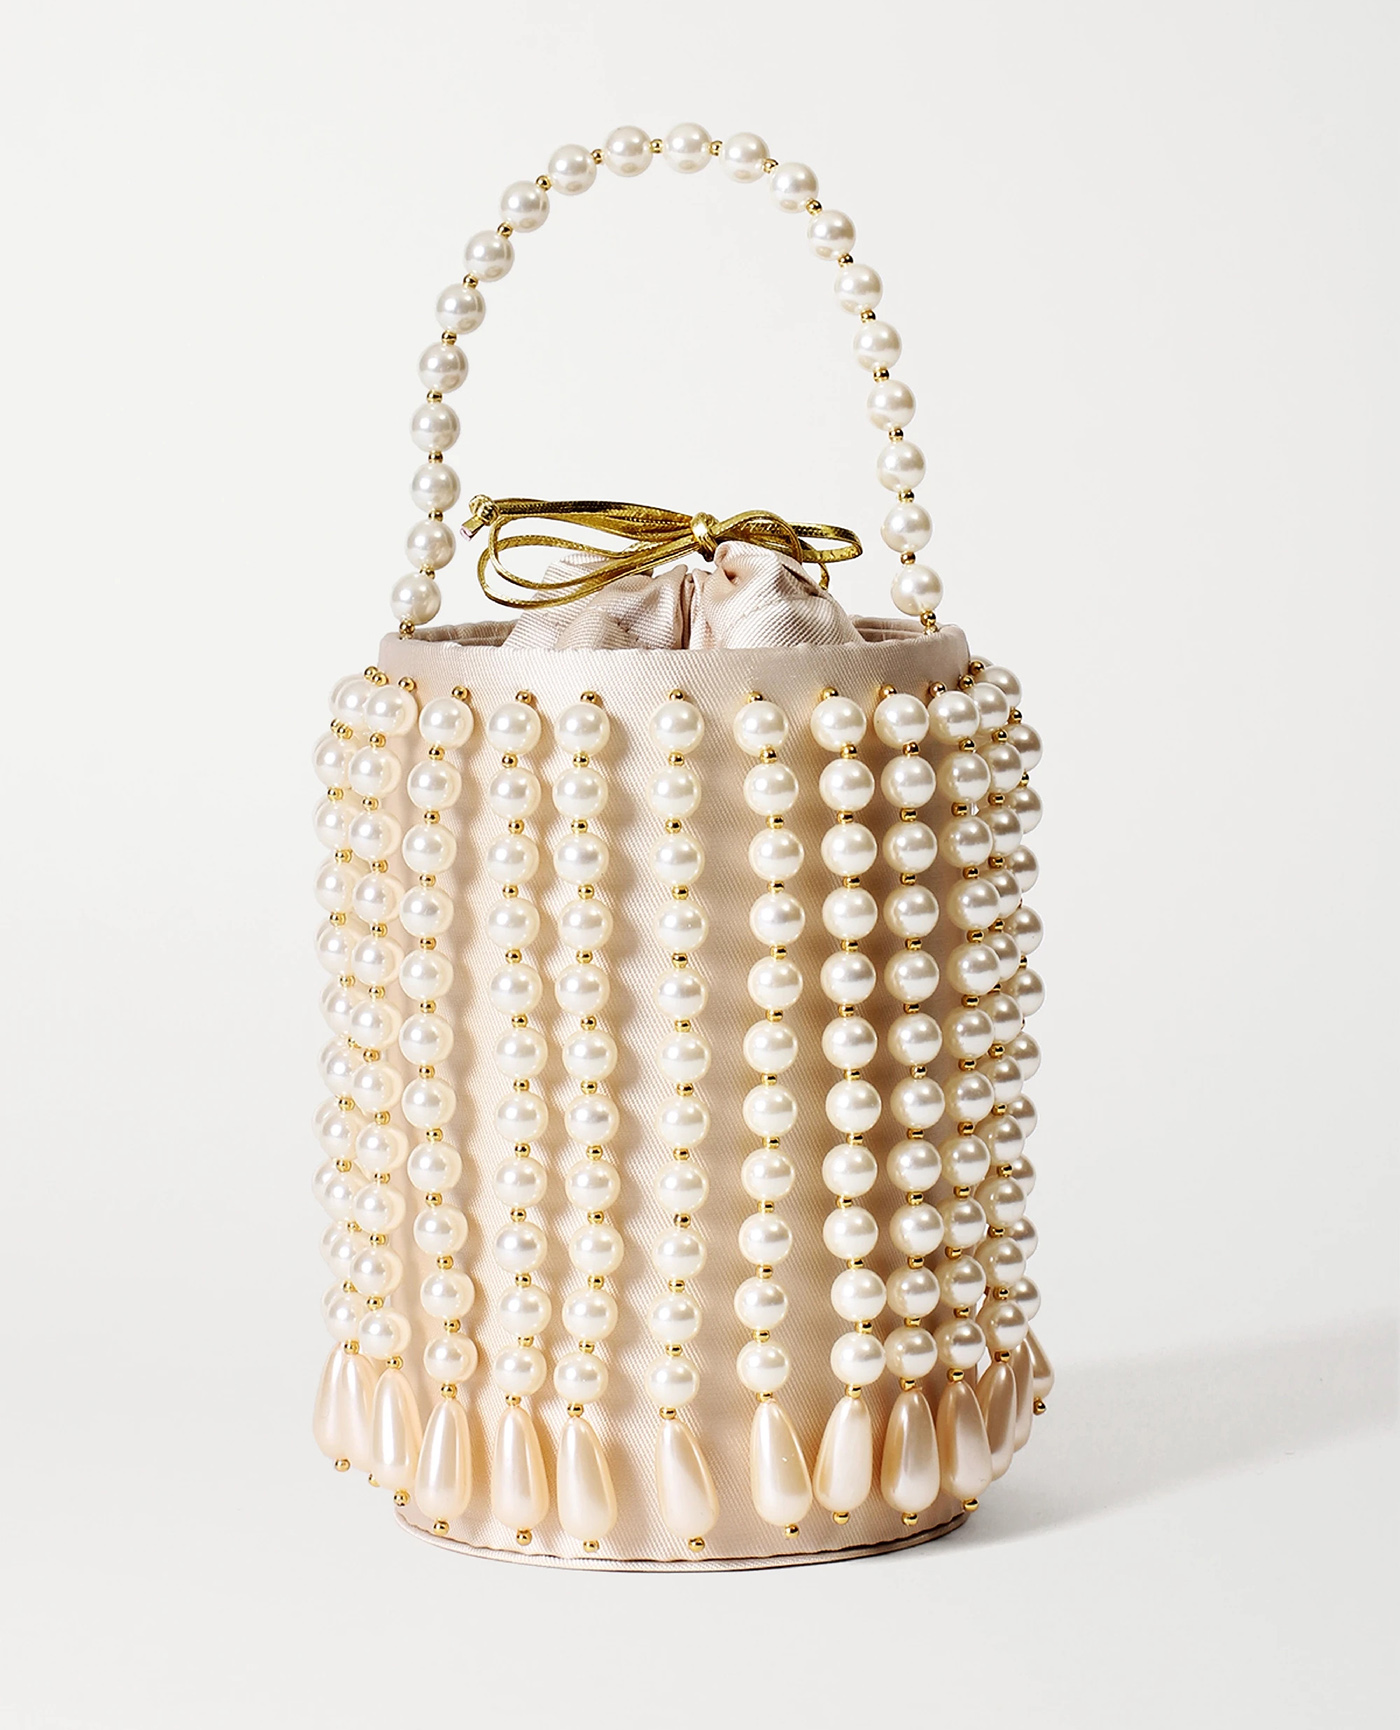 Bridgerton-Inspired Pearl Handbag